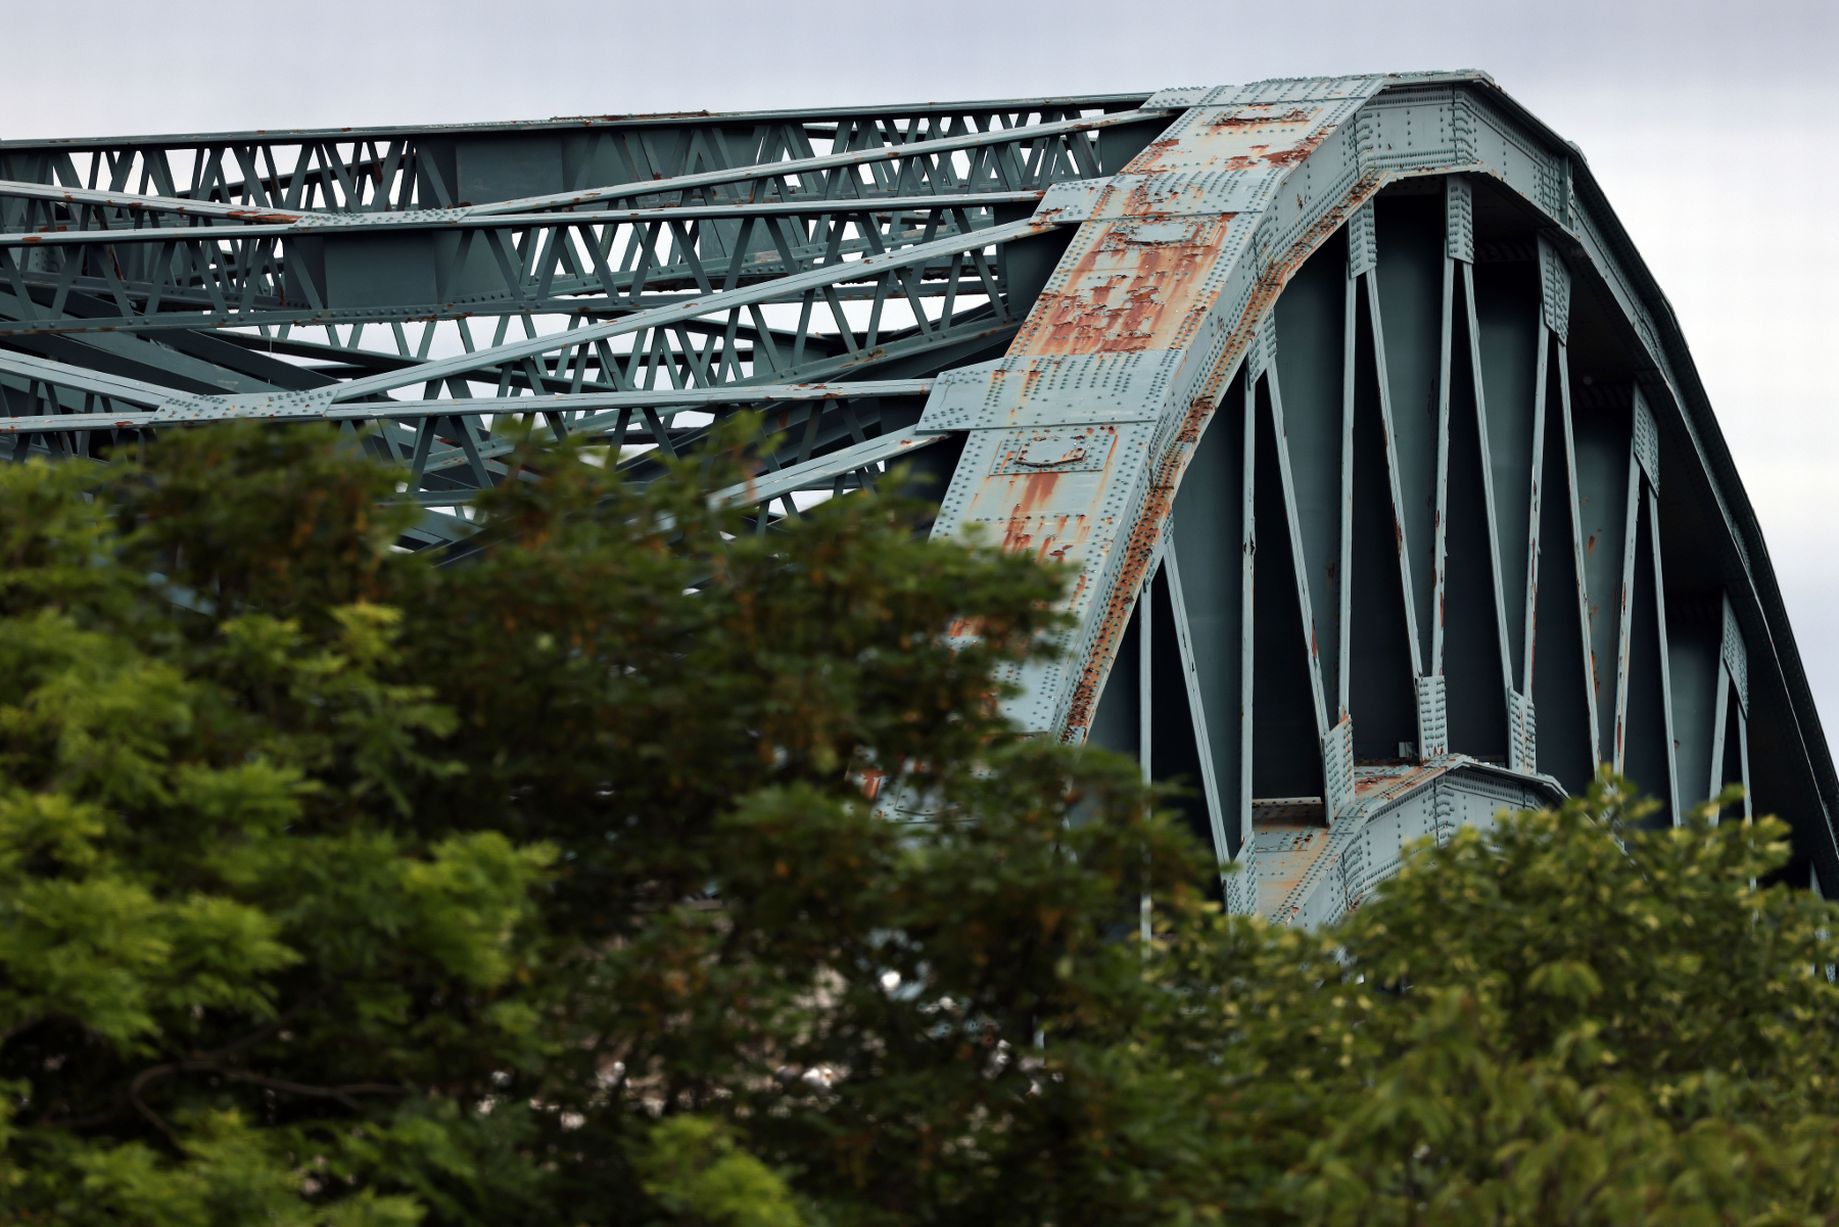 Tyne Bridge must be refurbished